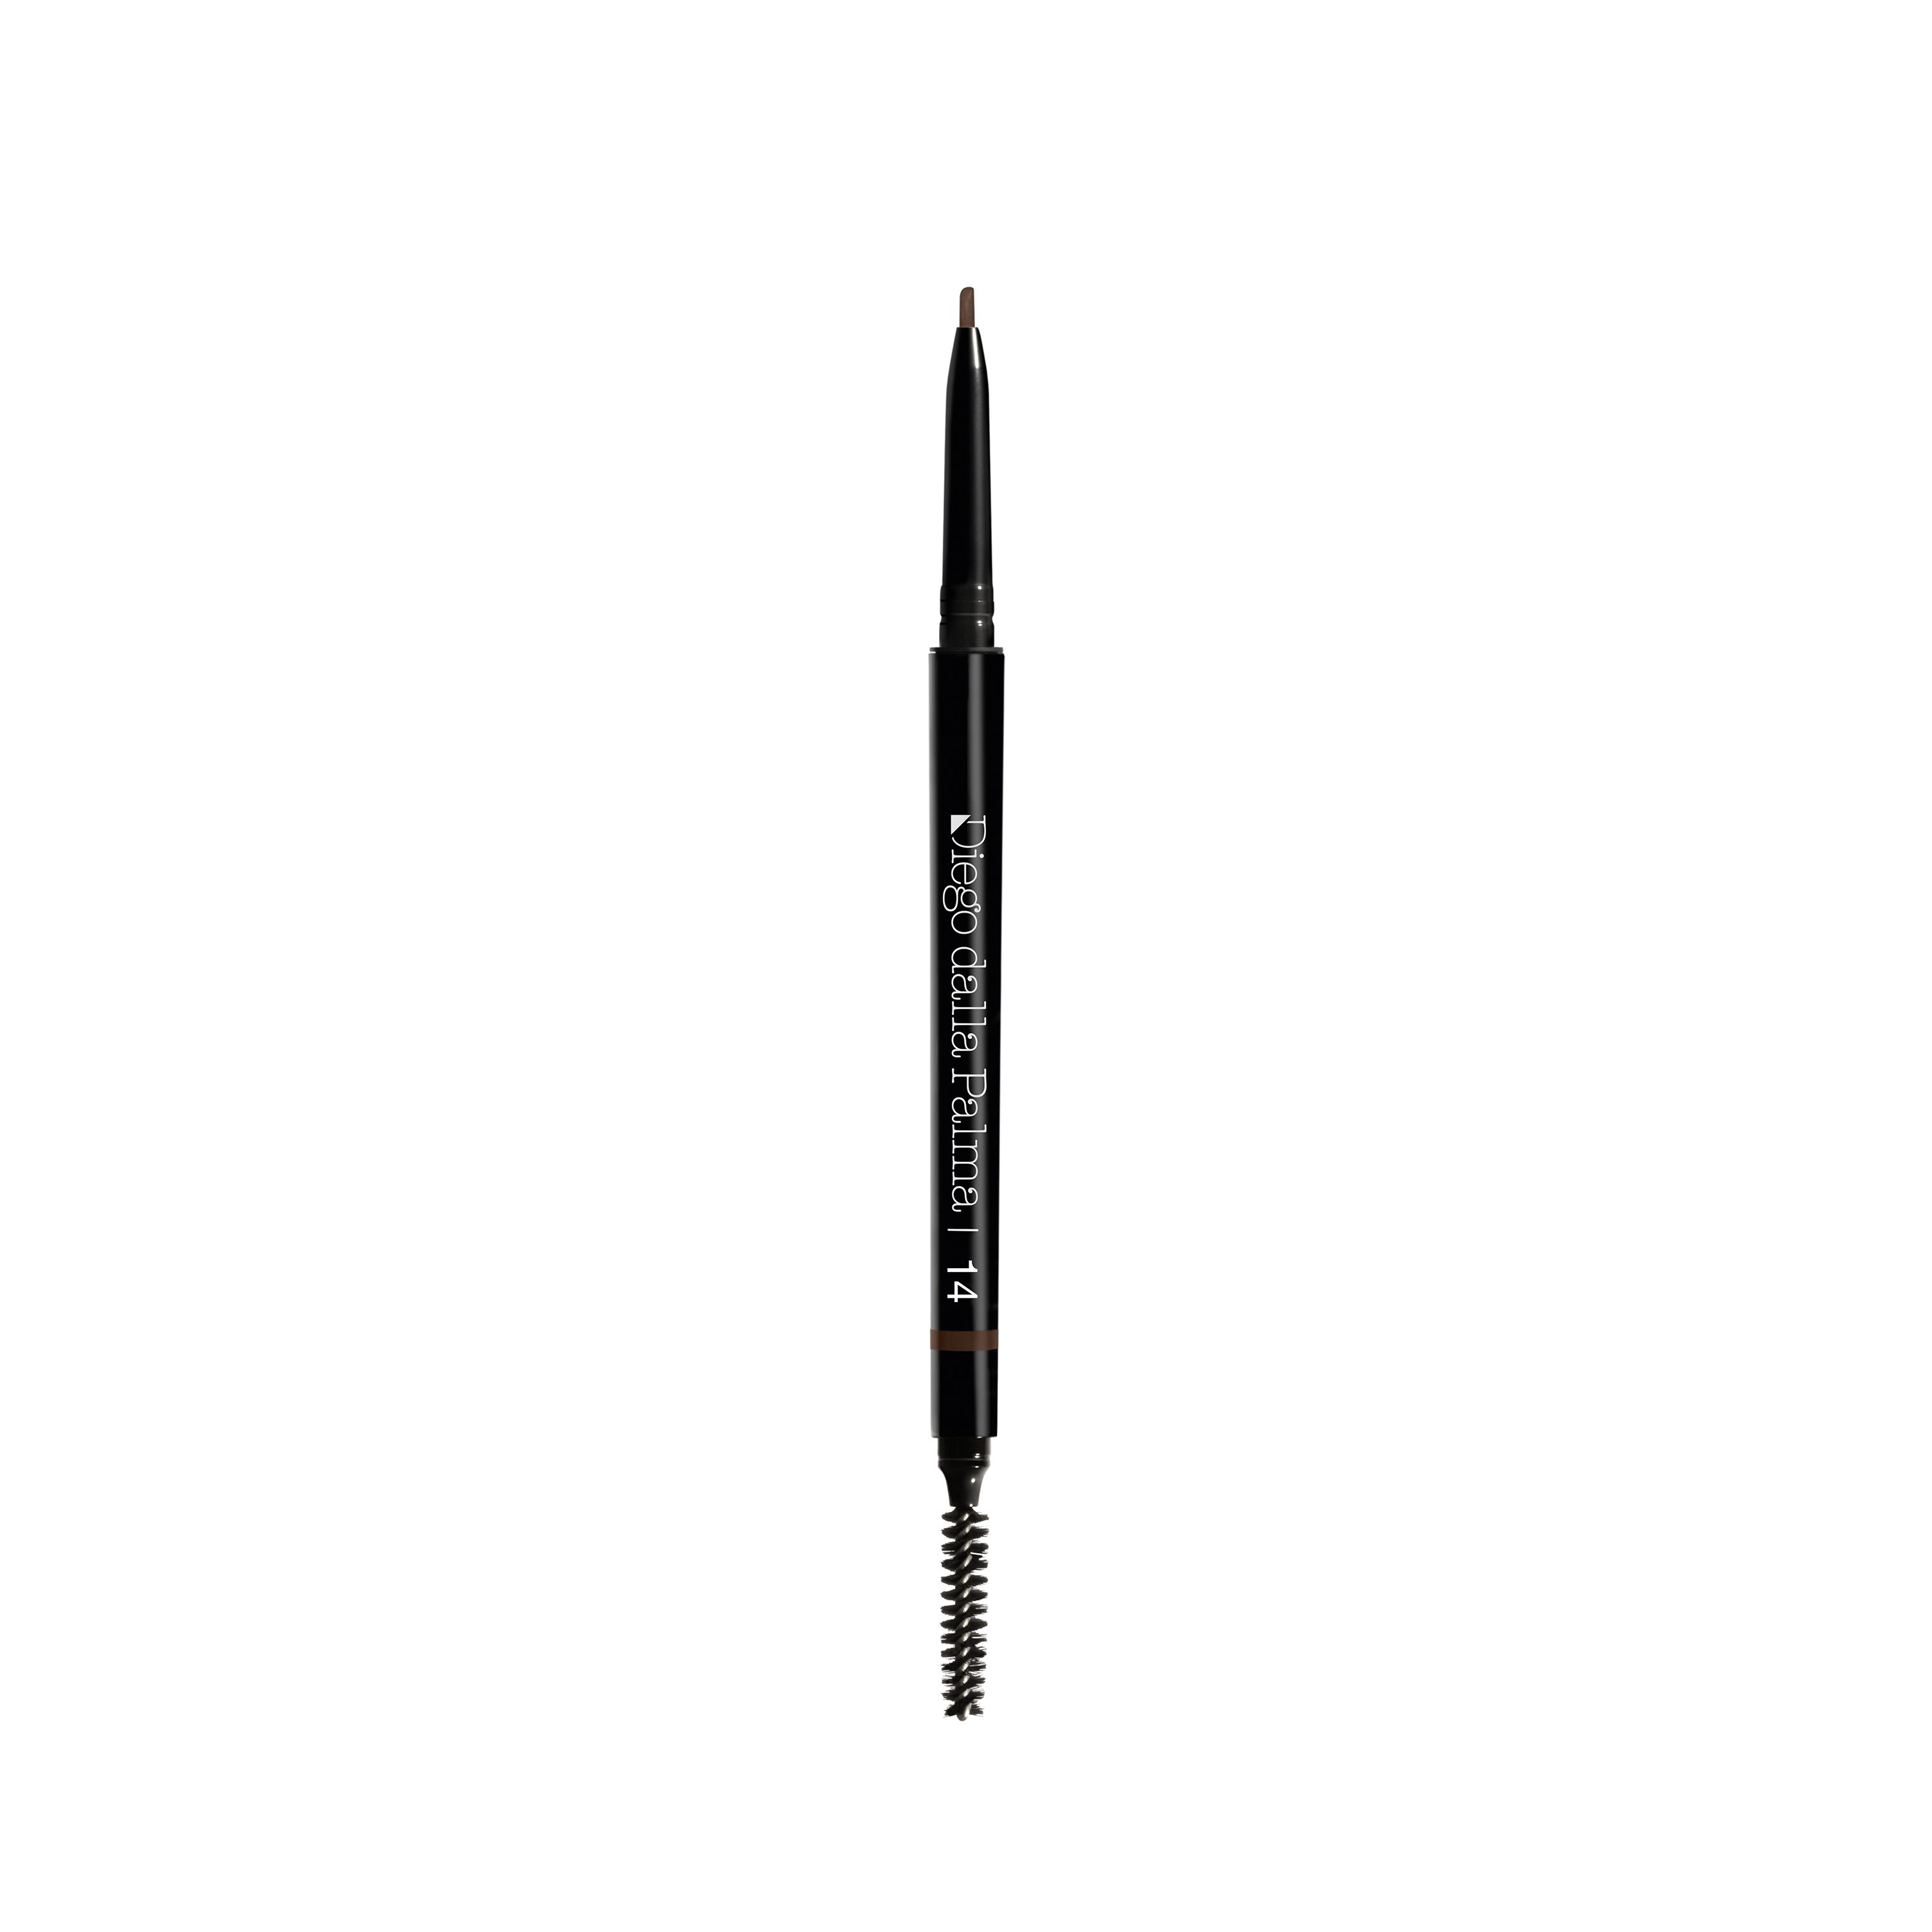 High Precision Long Lasting Eyebrow Pencil - 14 smoke black, Black, large image number 0